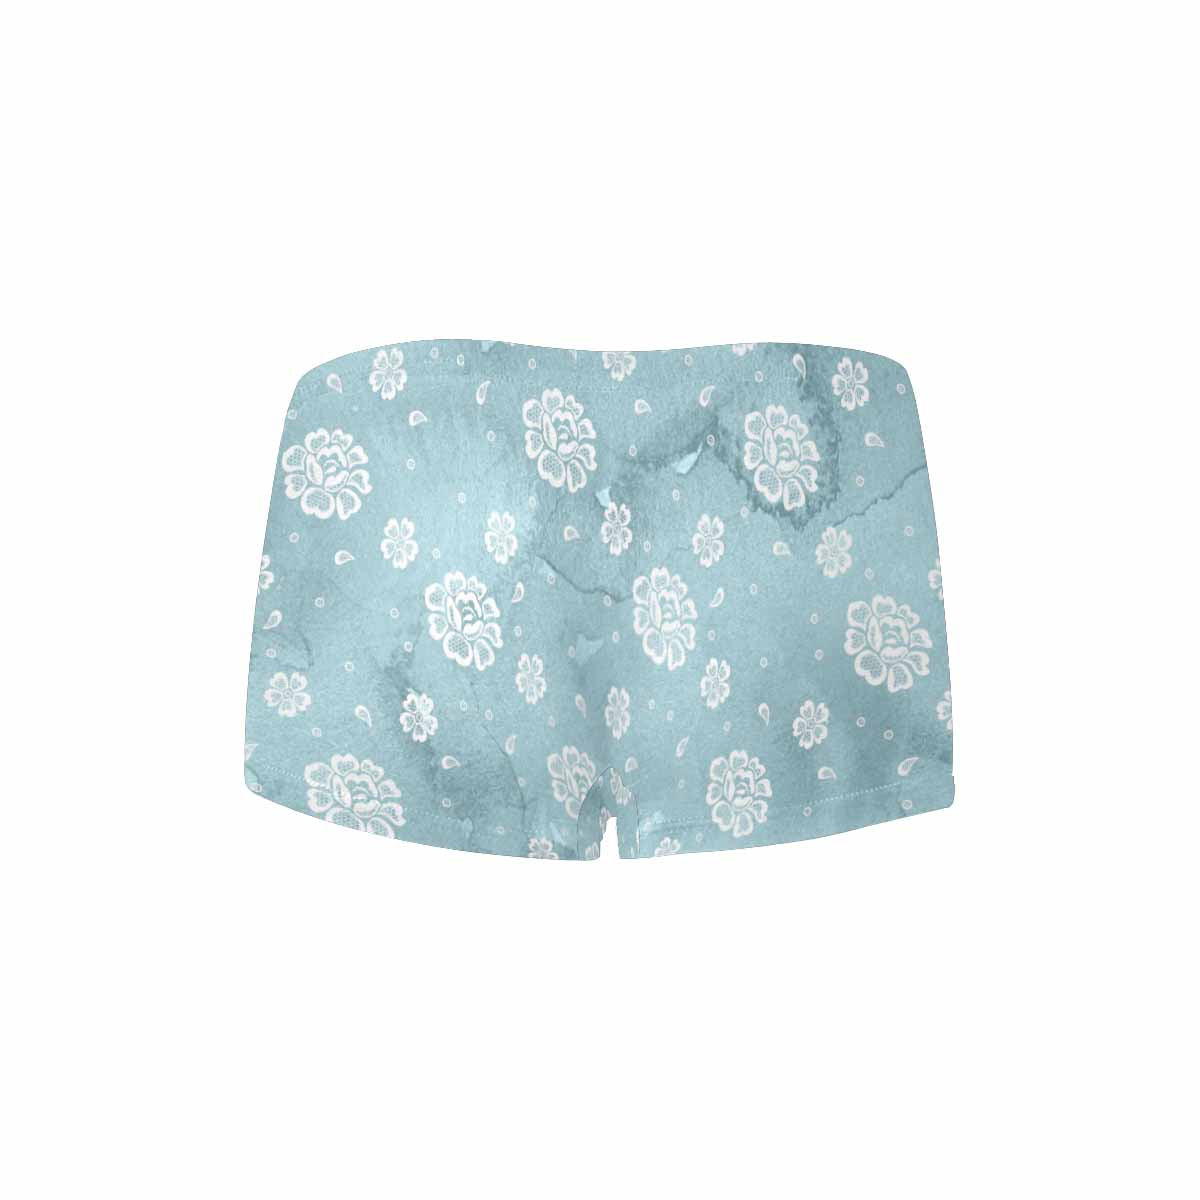 Floral 2, boyshorts, daisy dukes, pum pum shorts, panties, design 41